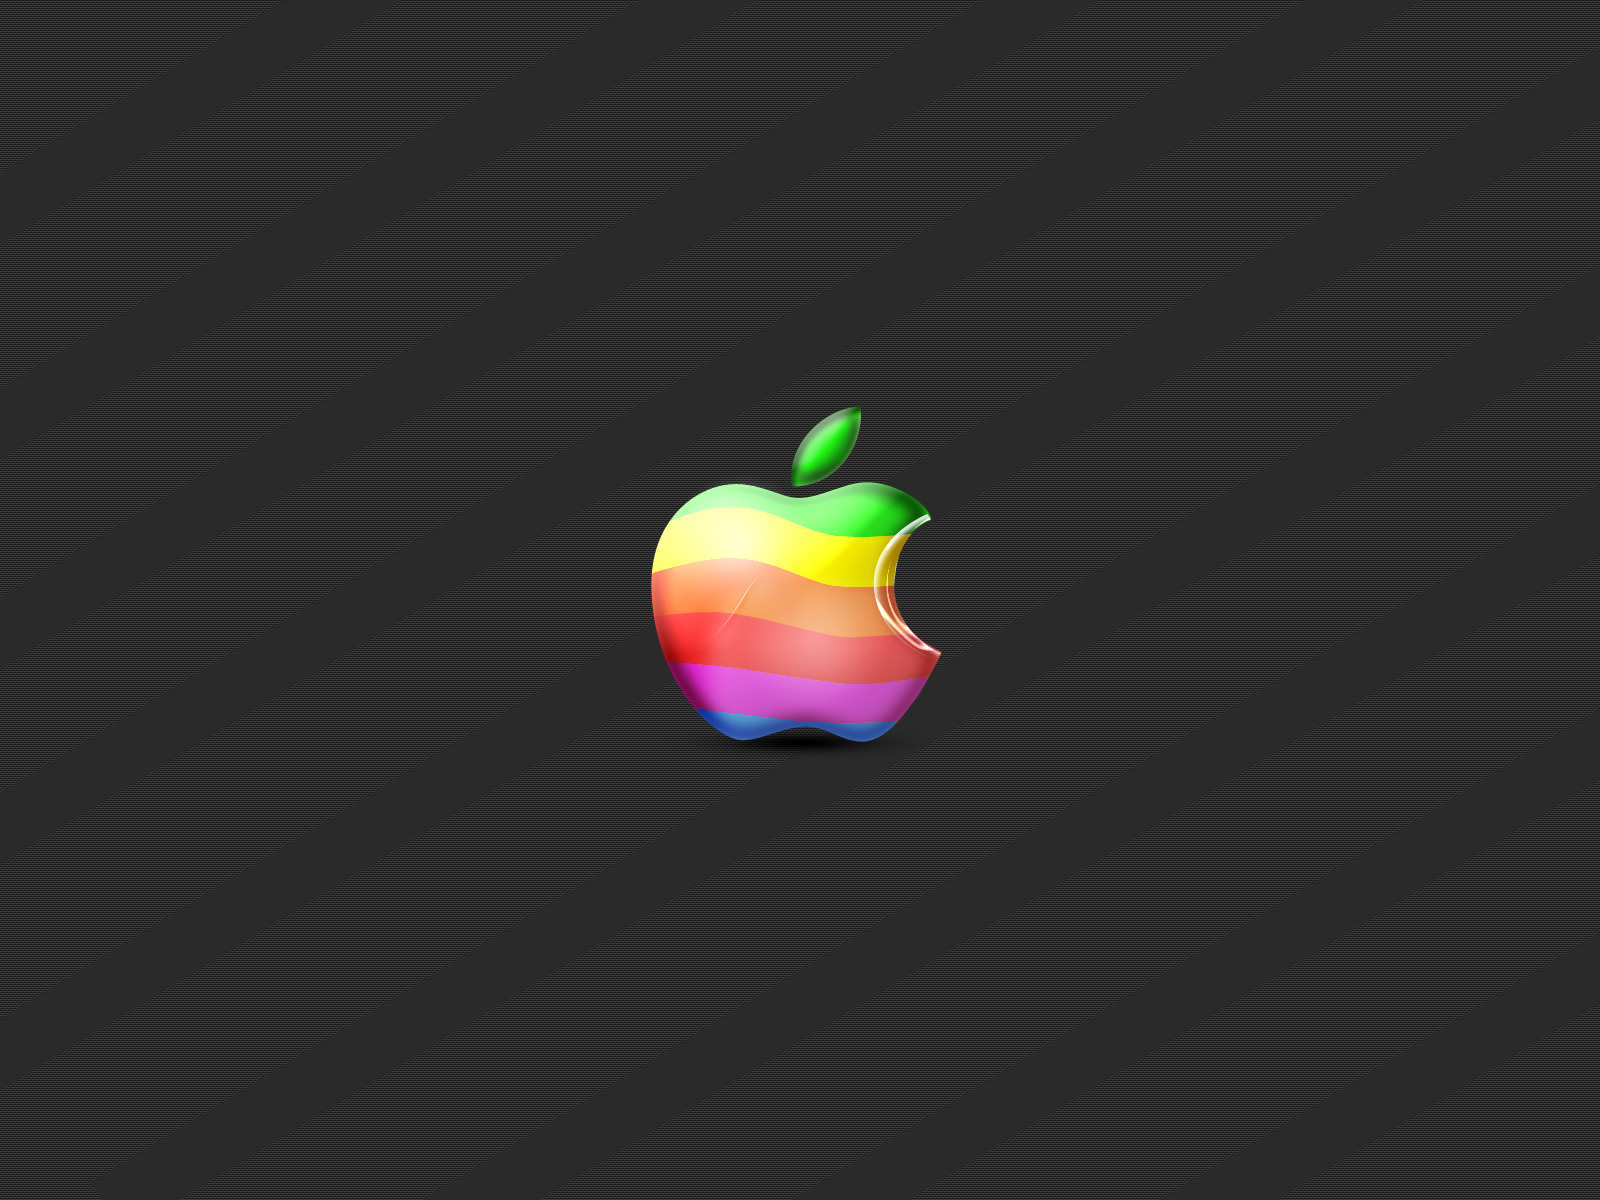 Cool Apple Wallpaper For Desktop